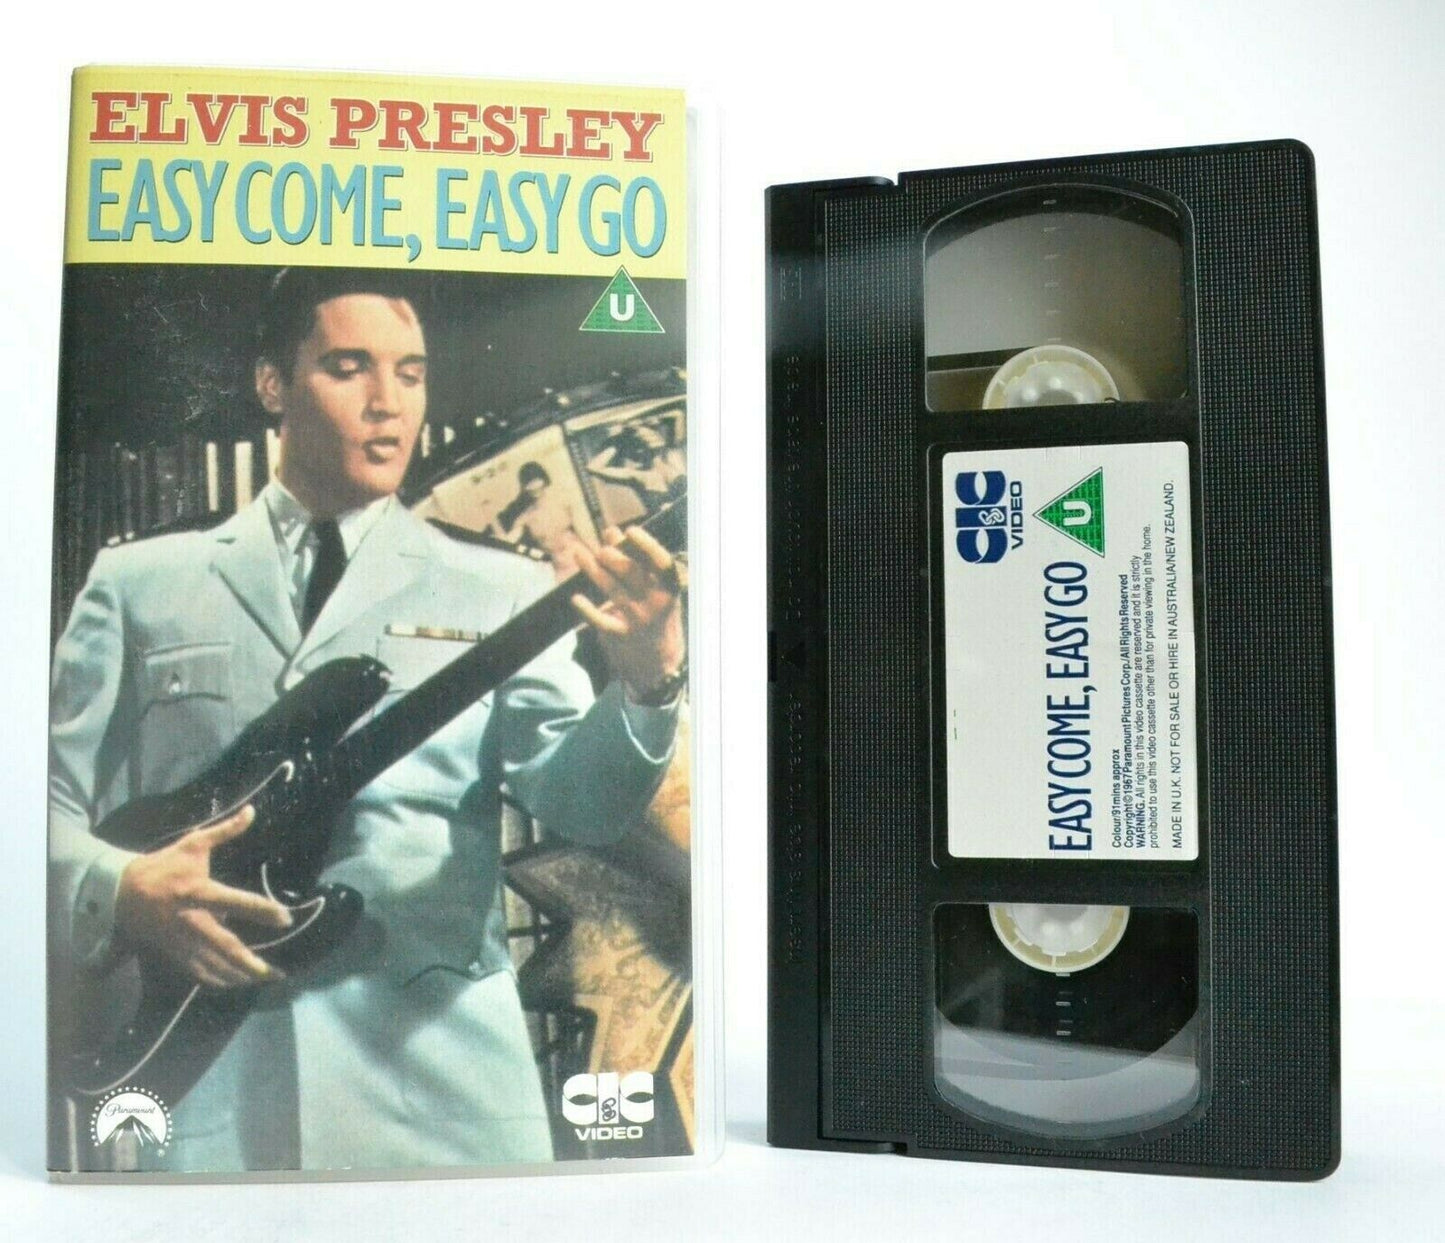 Easy Come, Easy Go (1967): Elvis Presley 23rd Film - Musical Comedy - Pal VHS-